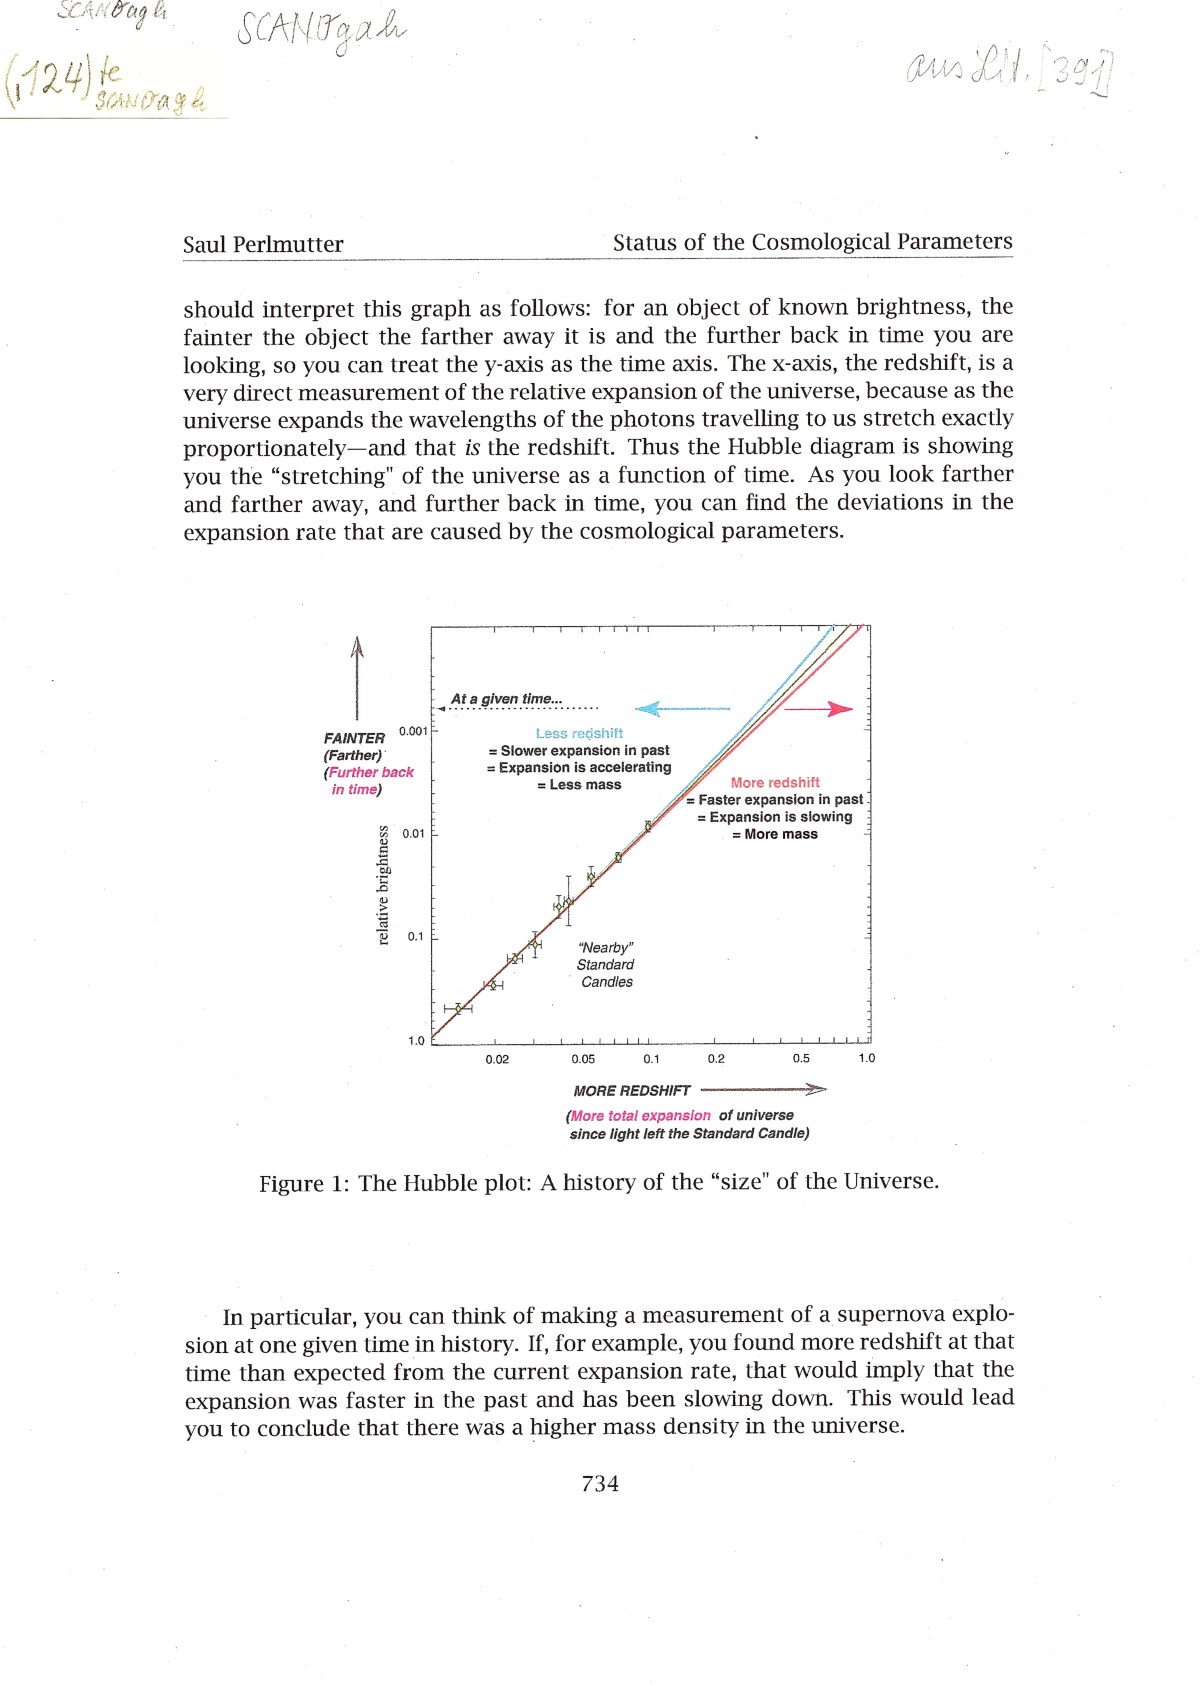 Original Nobelpreis Hubble_plot von SaulPerlmutter